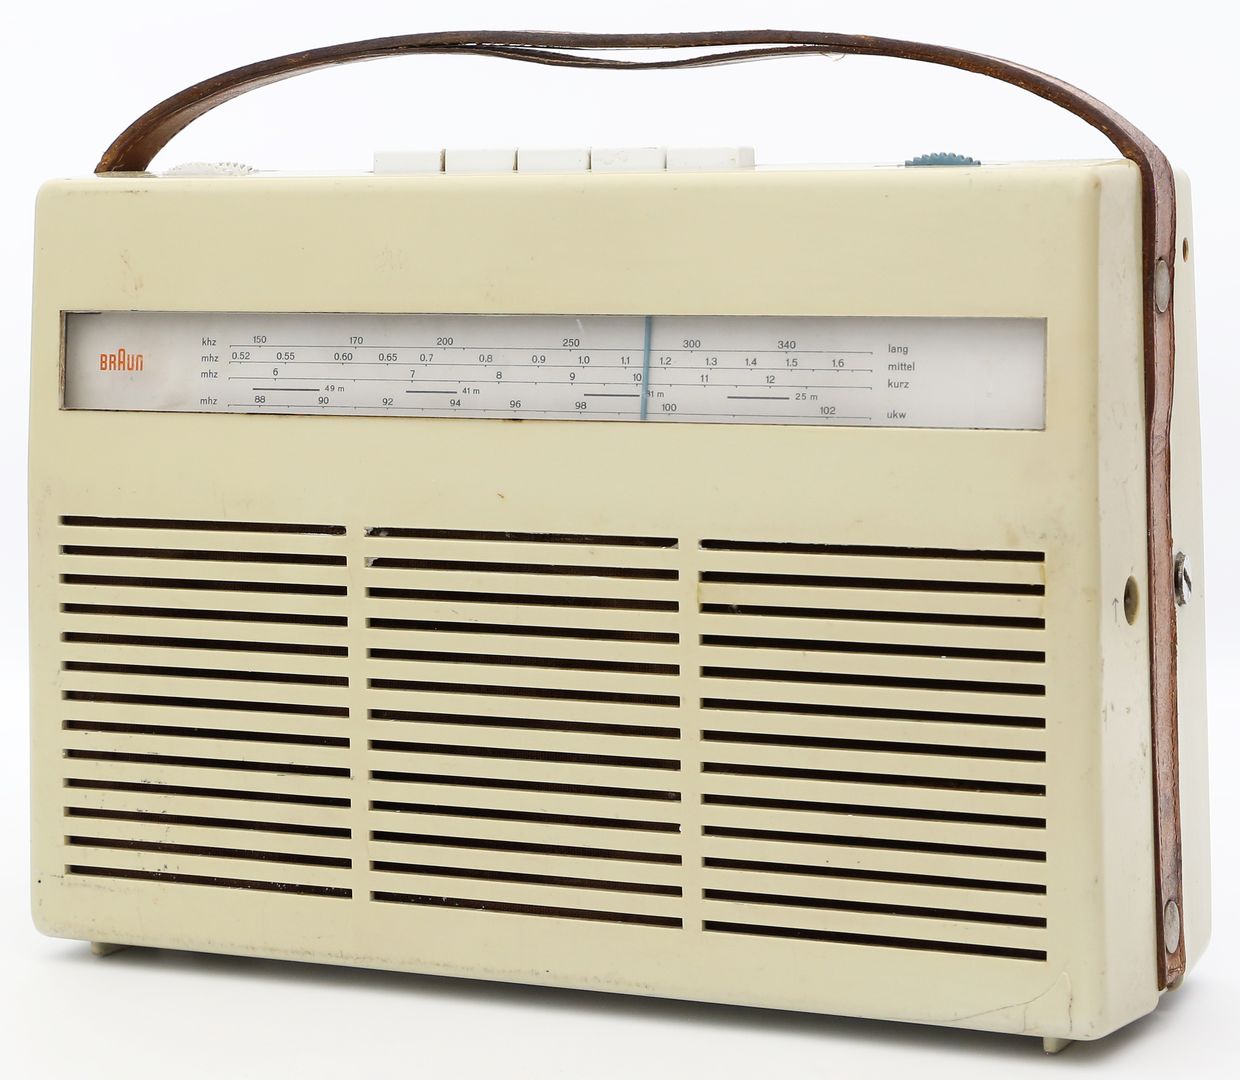 Tragbares Radio, Braun.